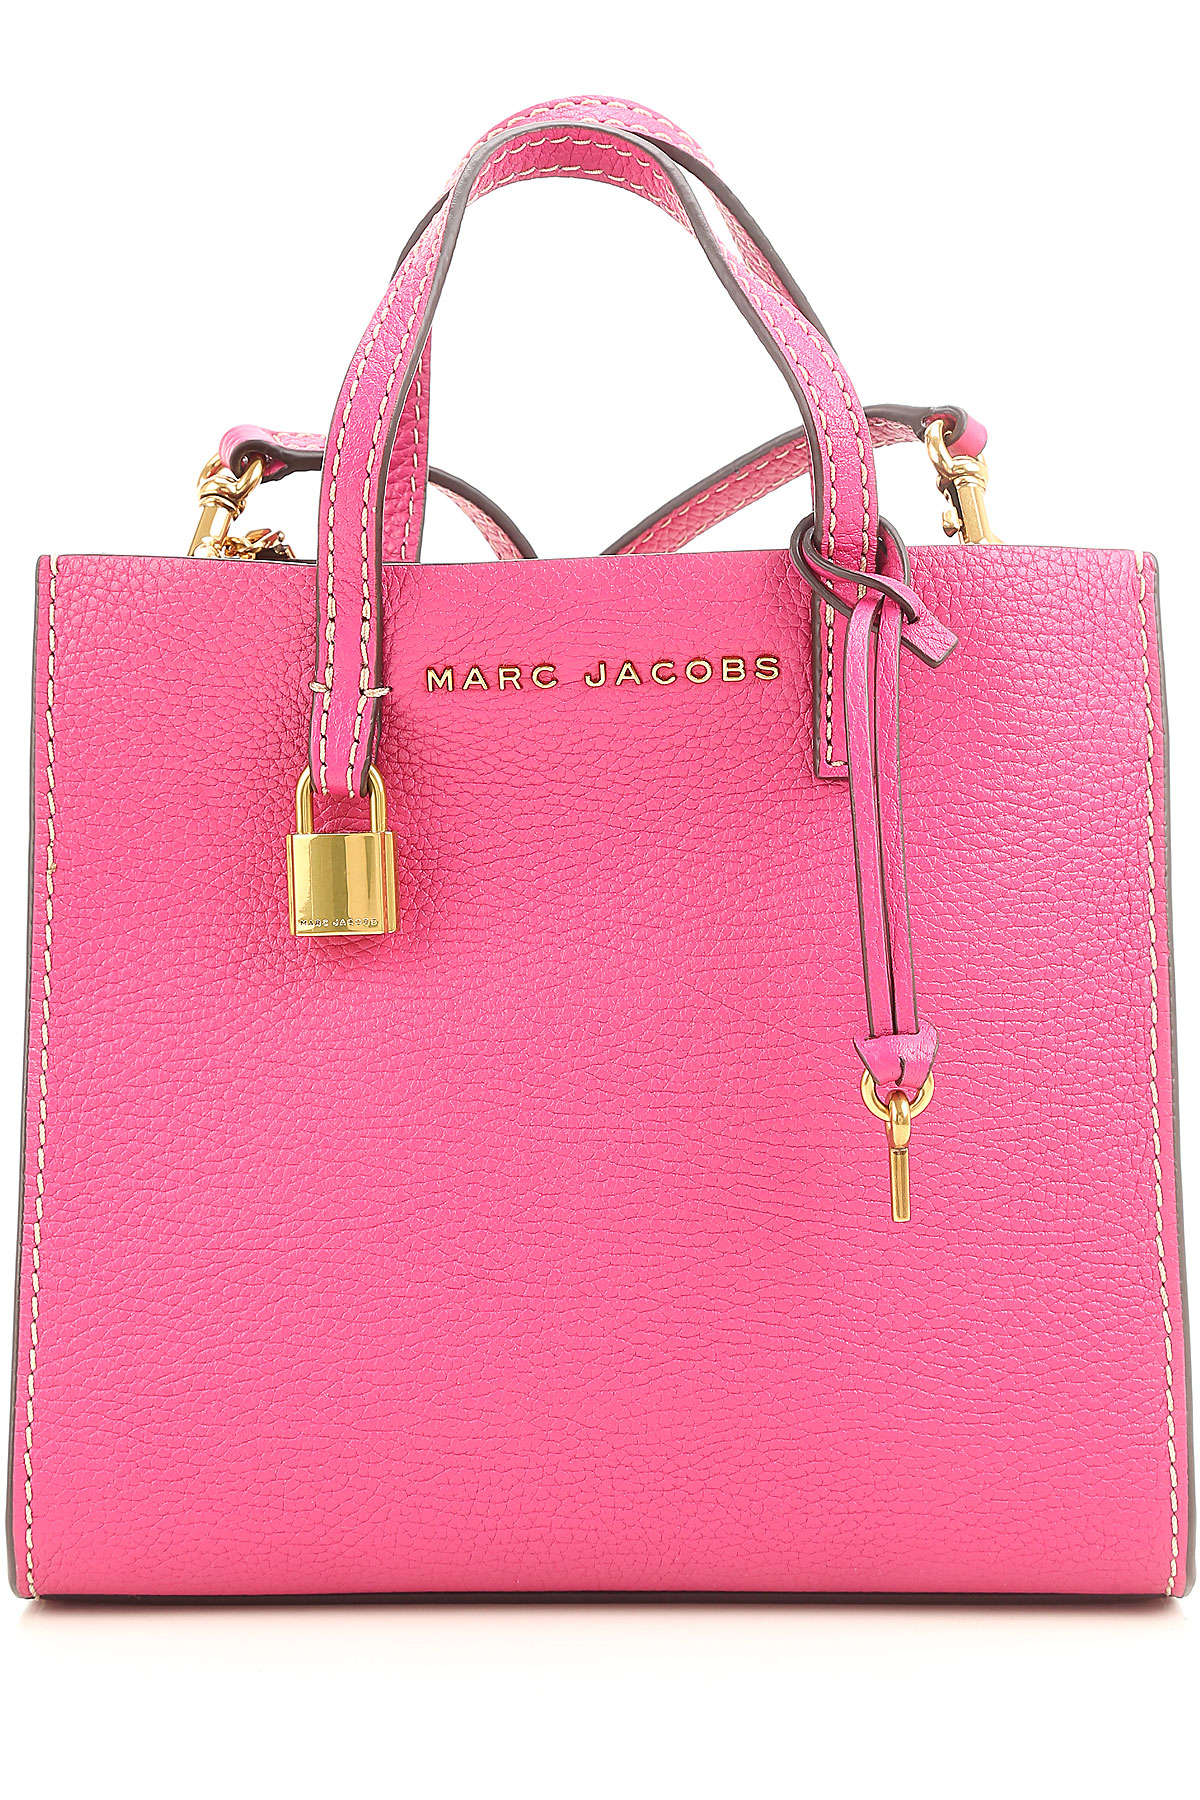 Handbags Marc Jacobs, Style code: m0013268-451-A446